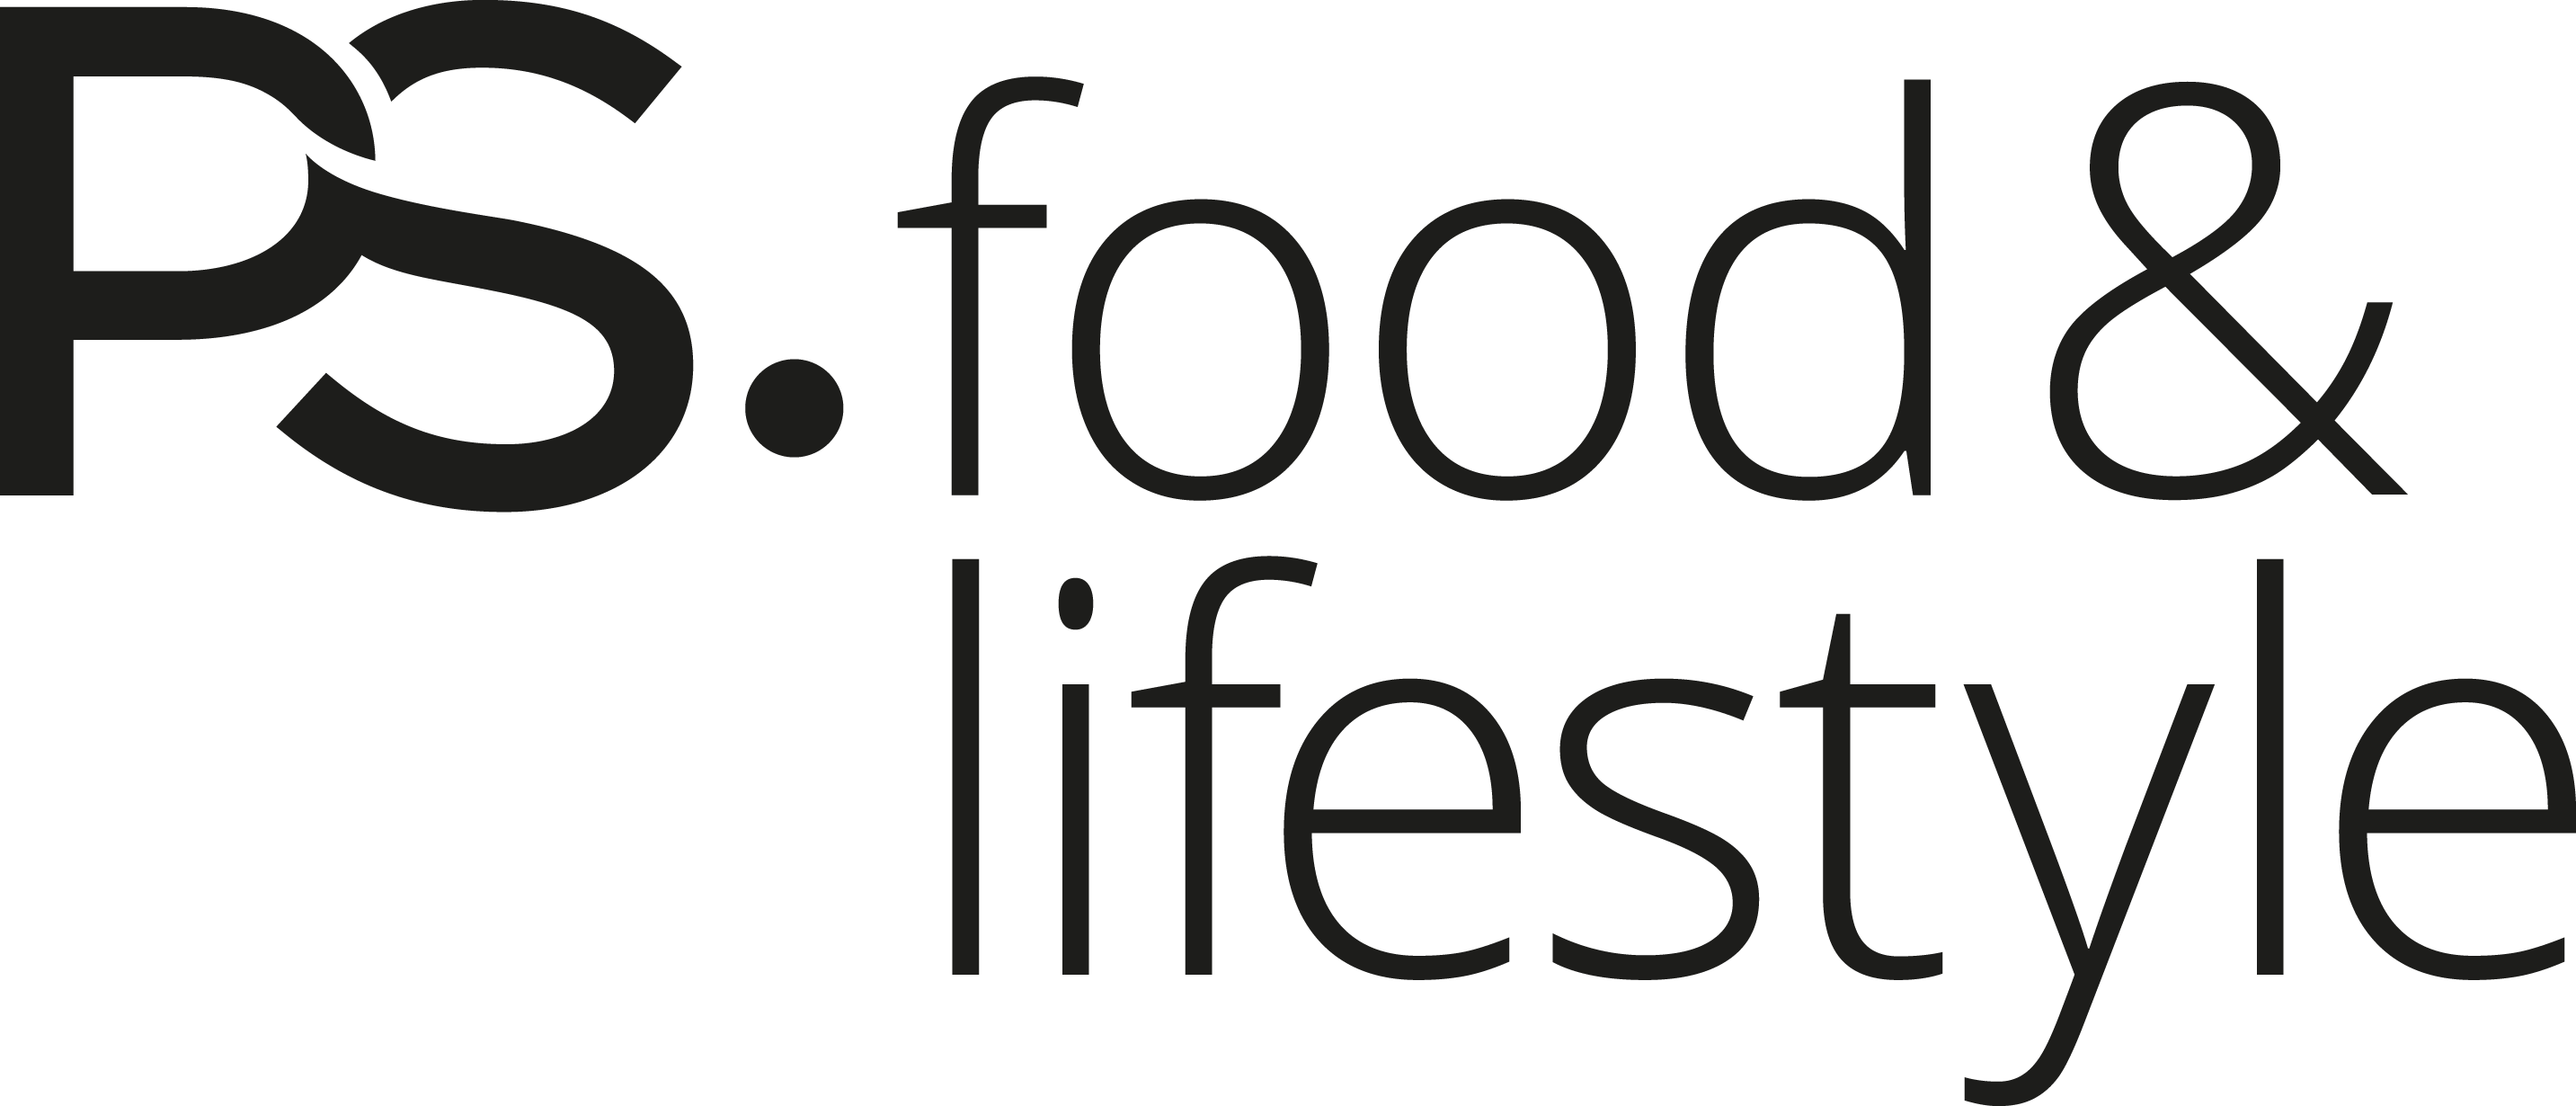 FIGURline - PS. food & lifestyle Logo